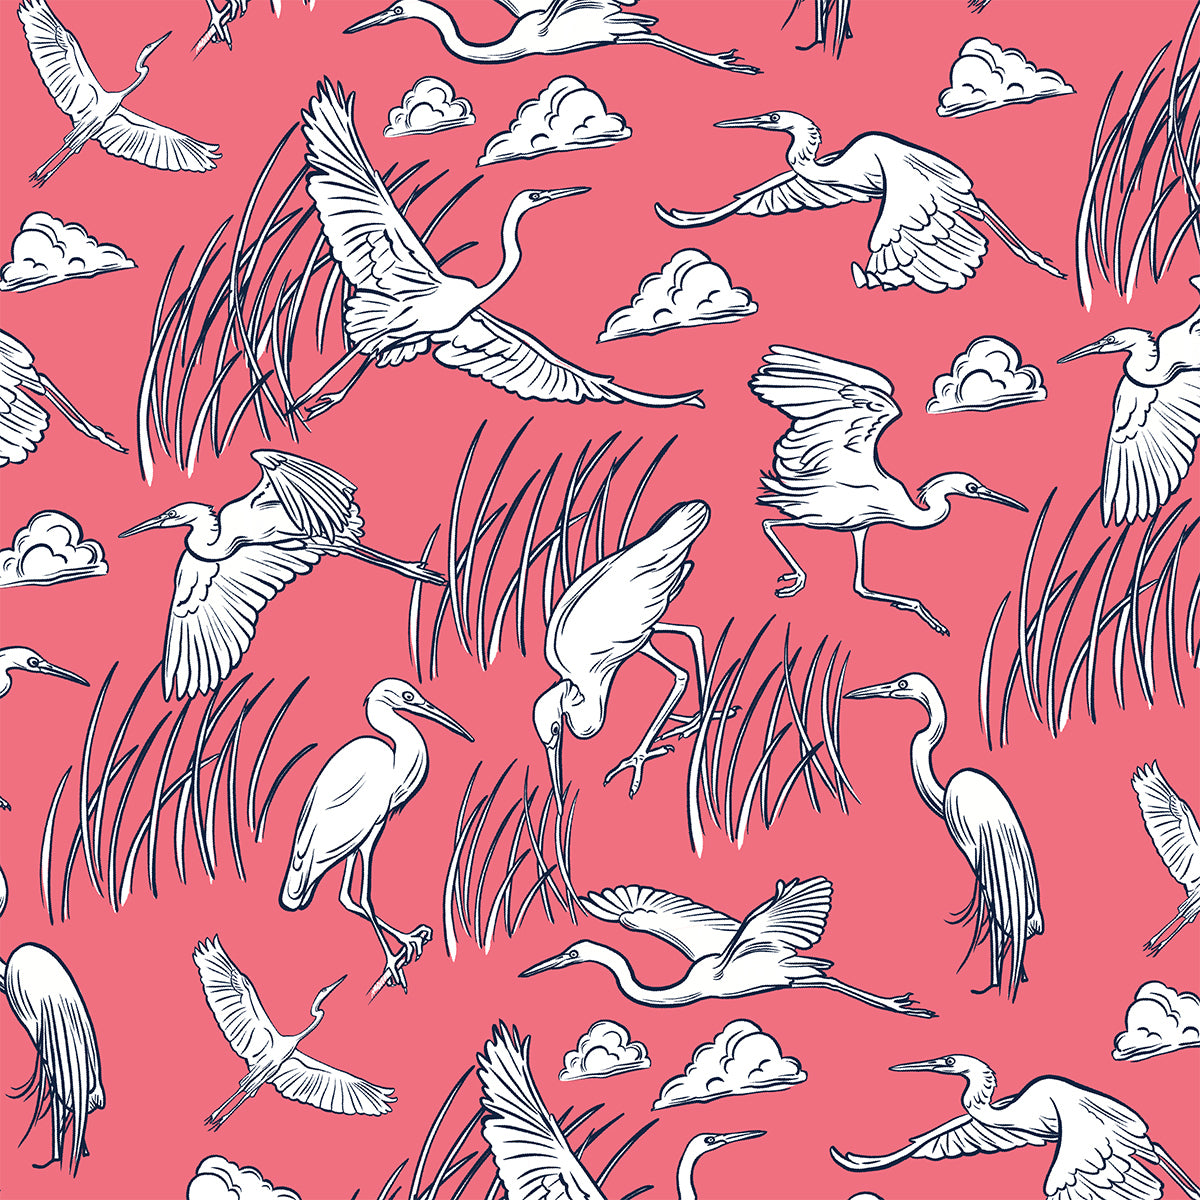 Egrets on Pink Blush Zip Top Tote - Posh Tide